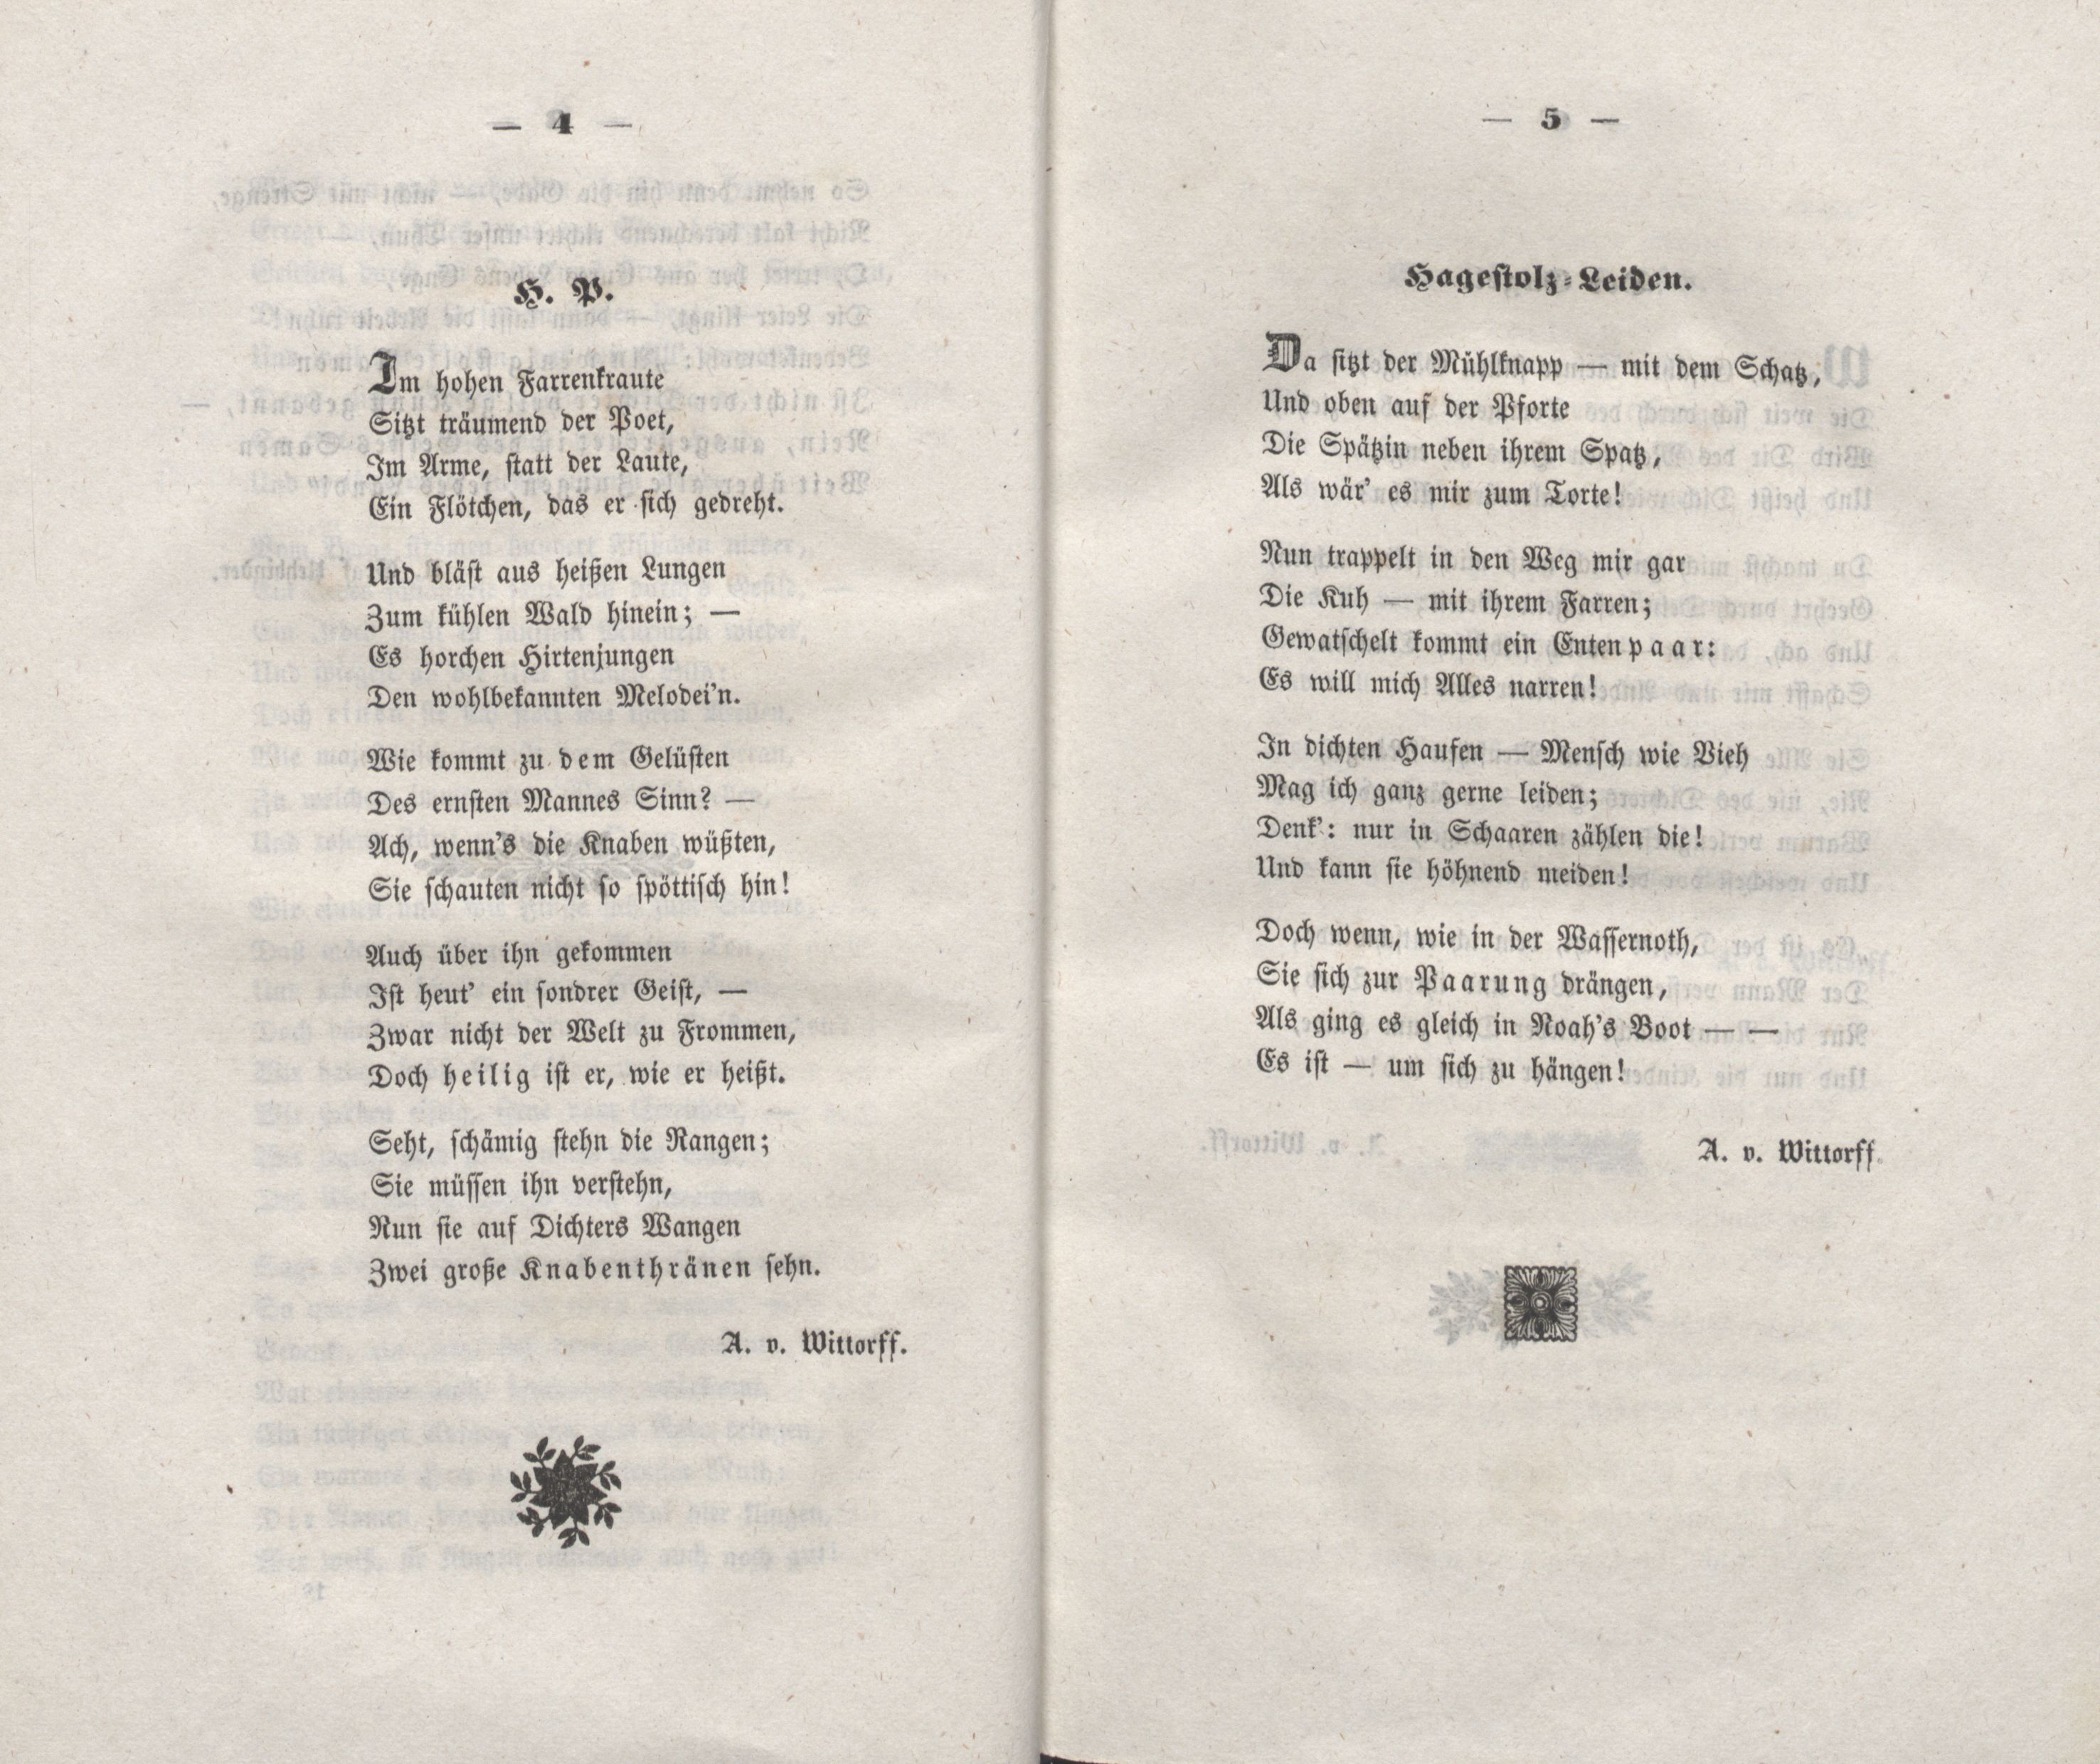 Hagestolz-Leiden (1848) | 1. (4-5) Main body of text